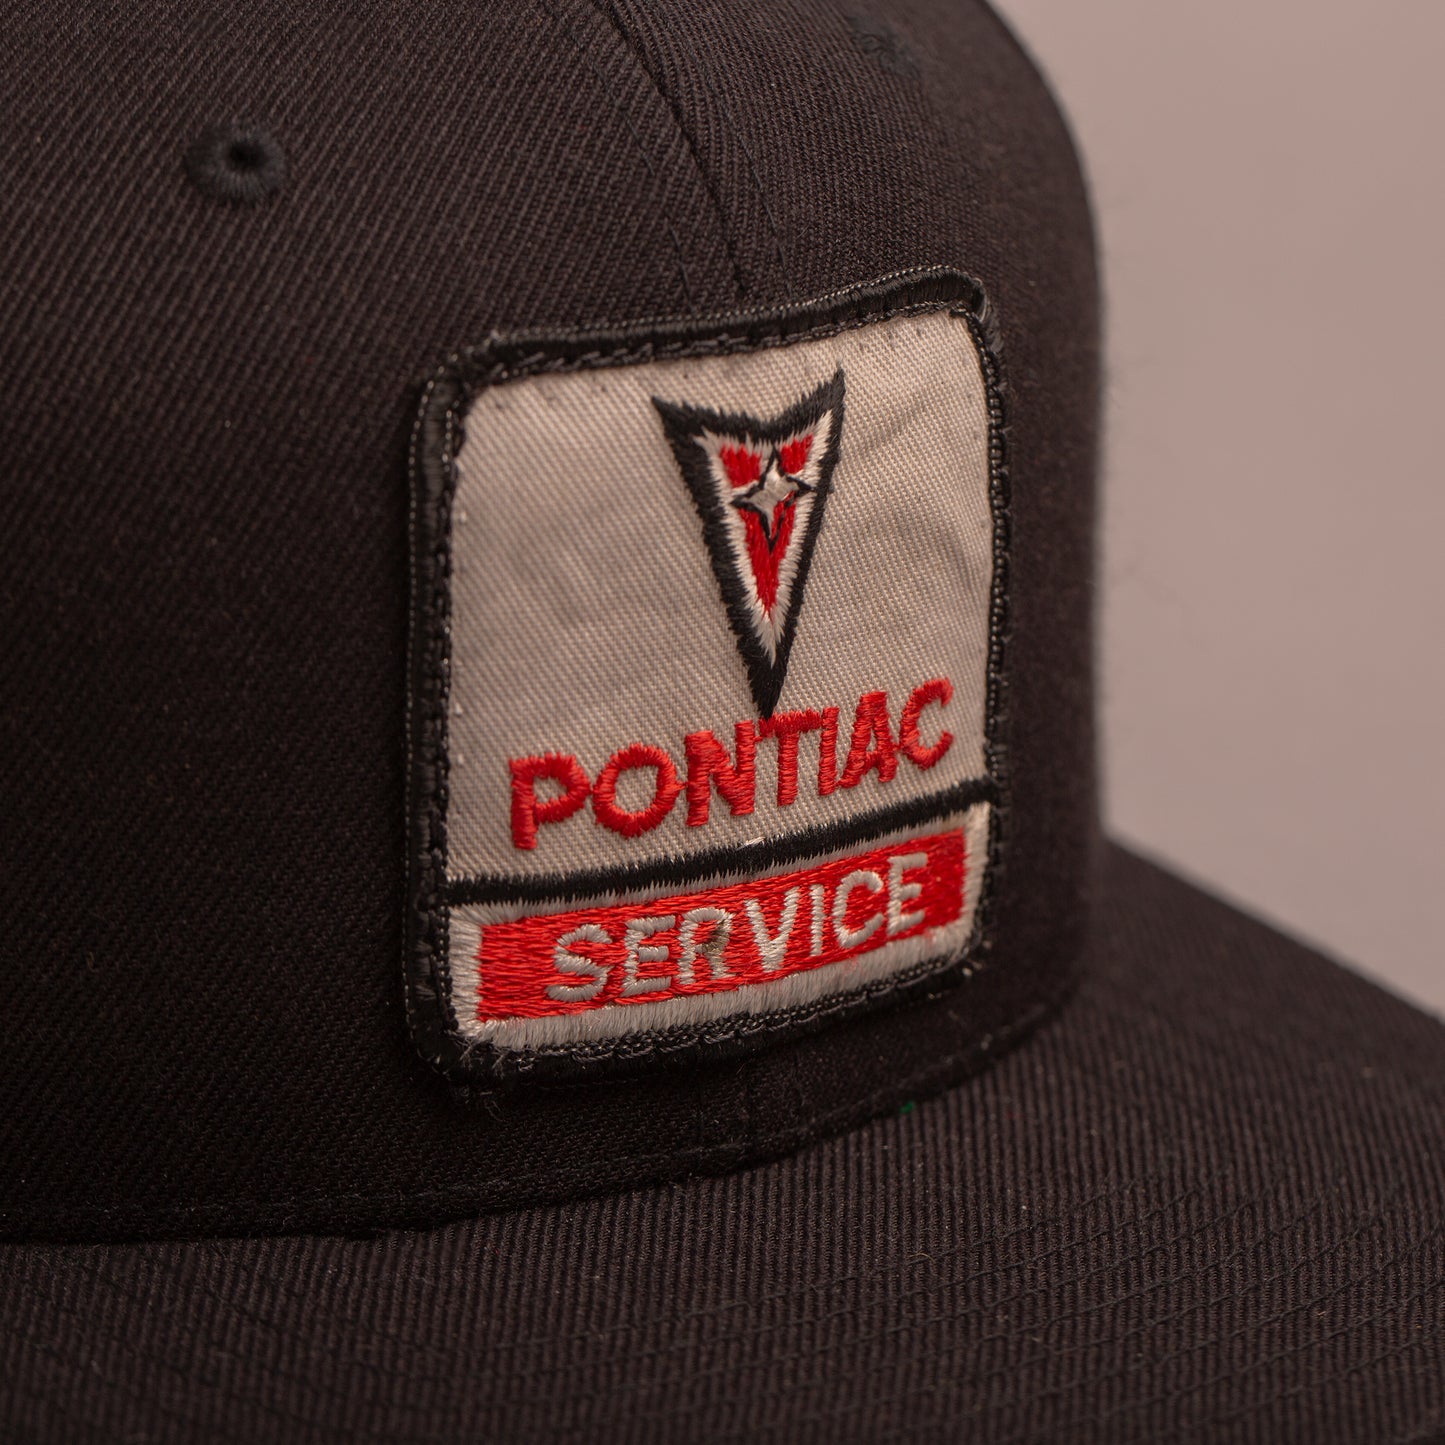 Pontiac Service Snapback Hat